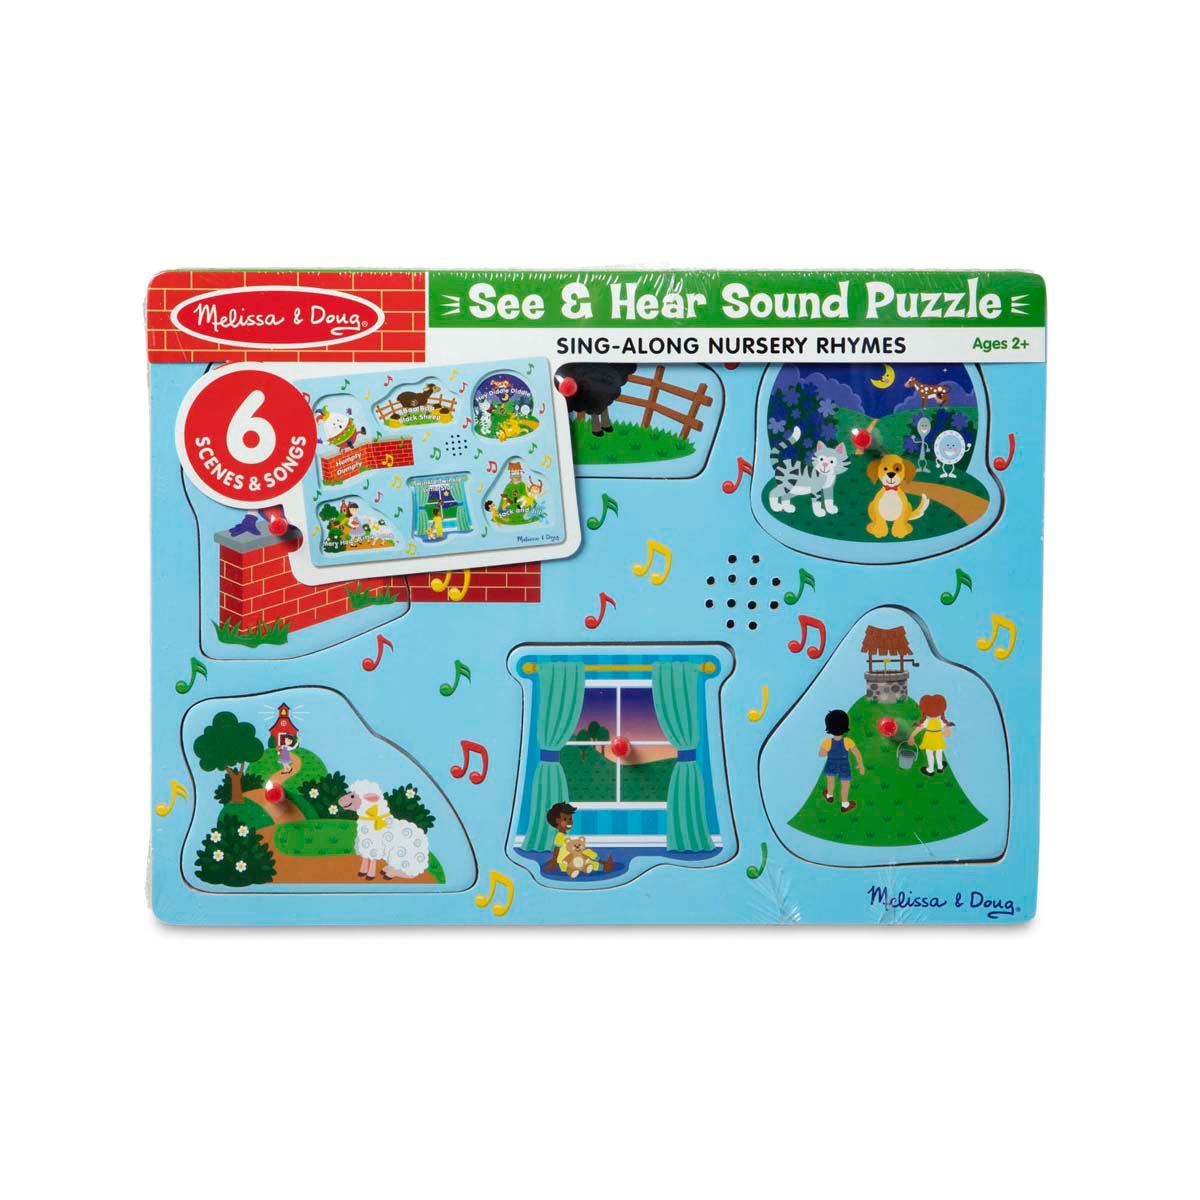 Melissa & Doug(R) 6pc. Nursery Rhymes 2 Sound Puzzle